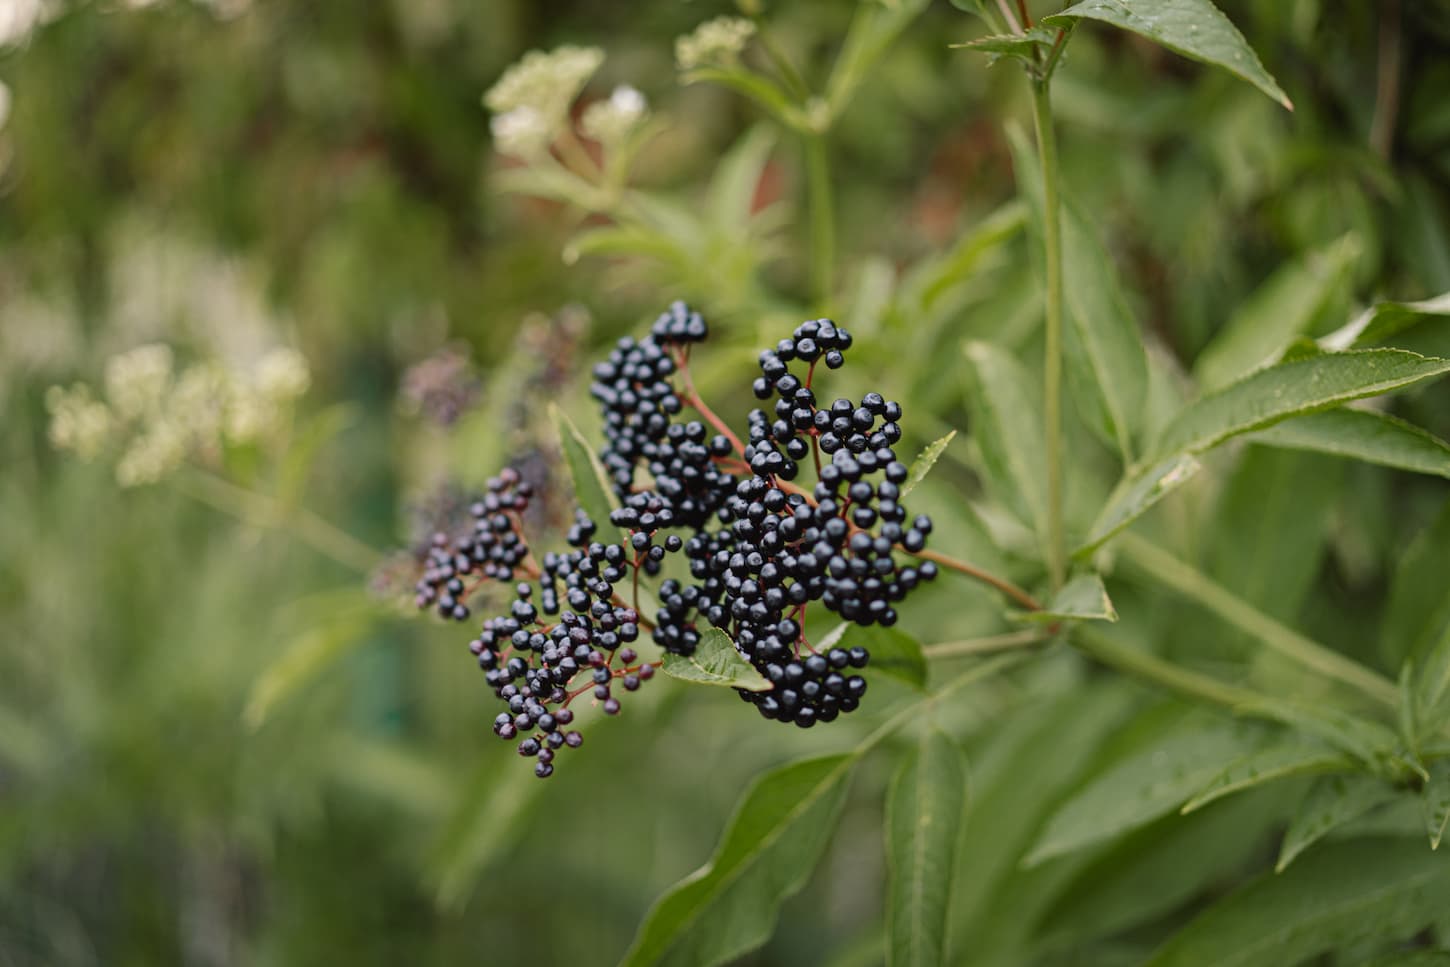 An image of elderberry tree with black berries in the garden.